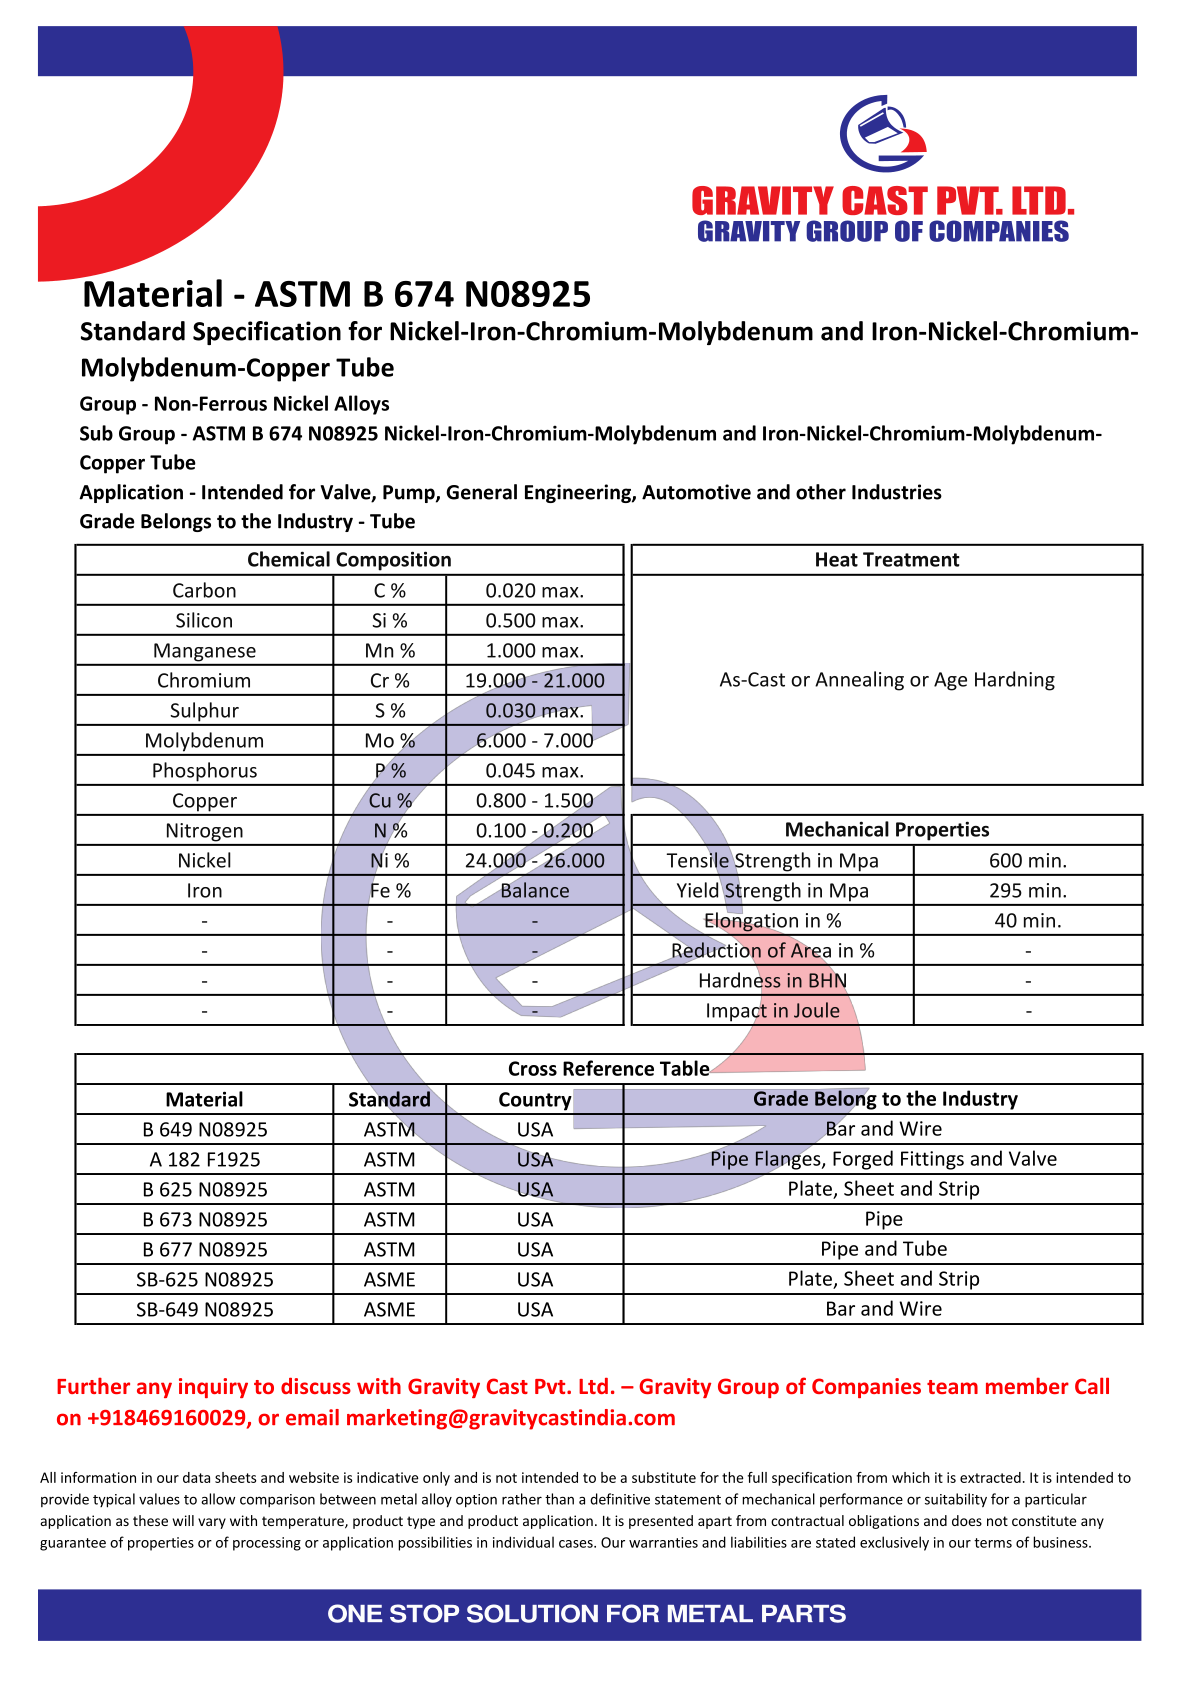 ASTM B 674 N08925.pdf